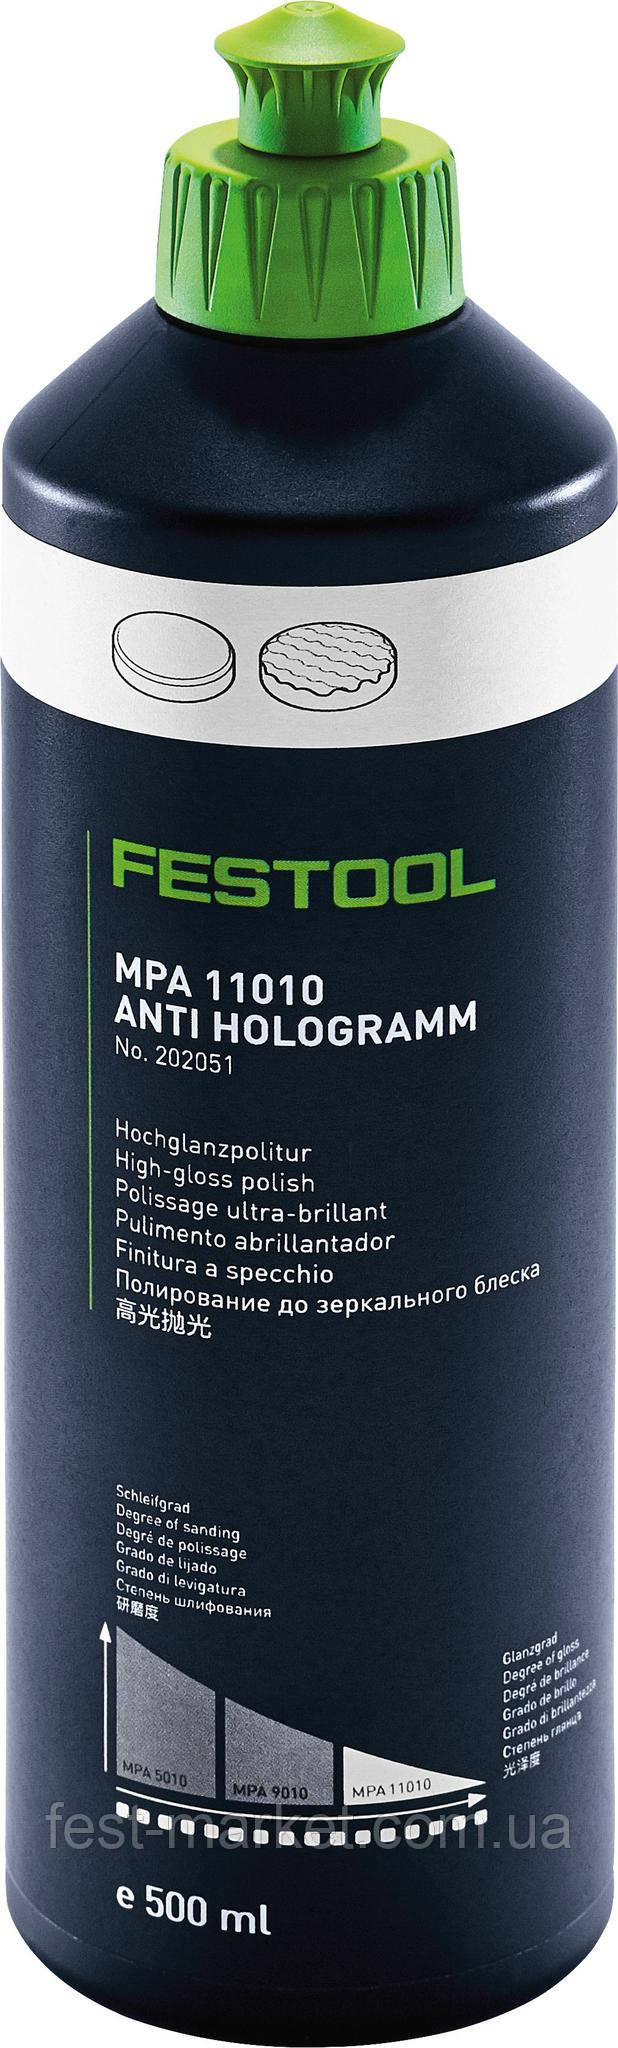 Полірувальна паста, шліфувальна паста, політура дзеркальна Ceramic MPA 11010 WH/0,5 L, Festool 202051